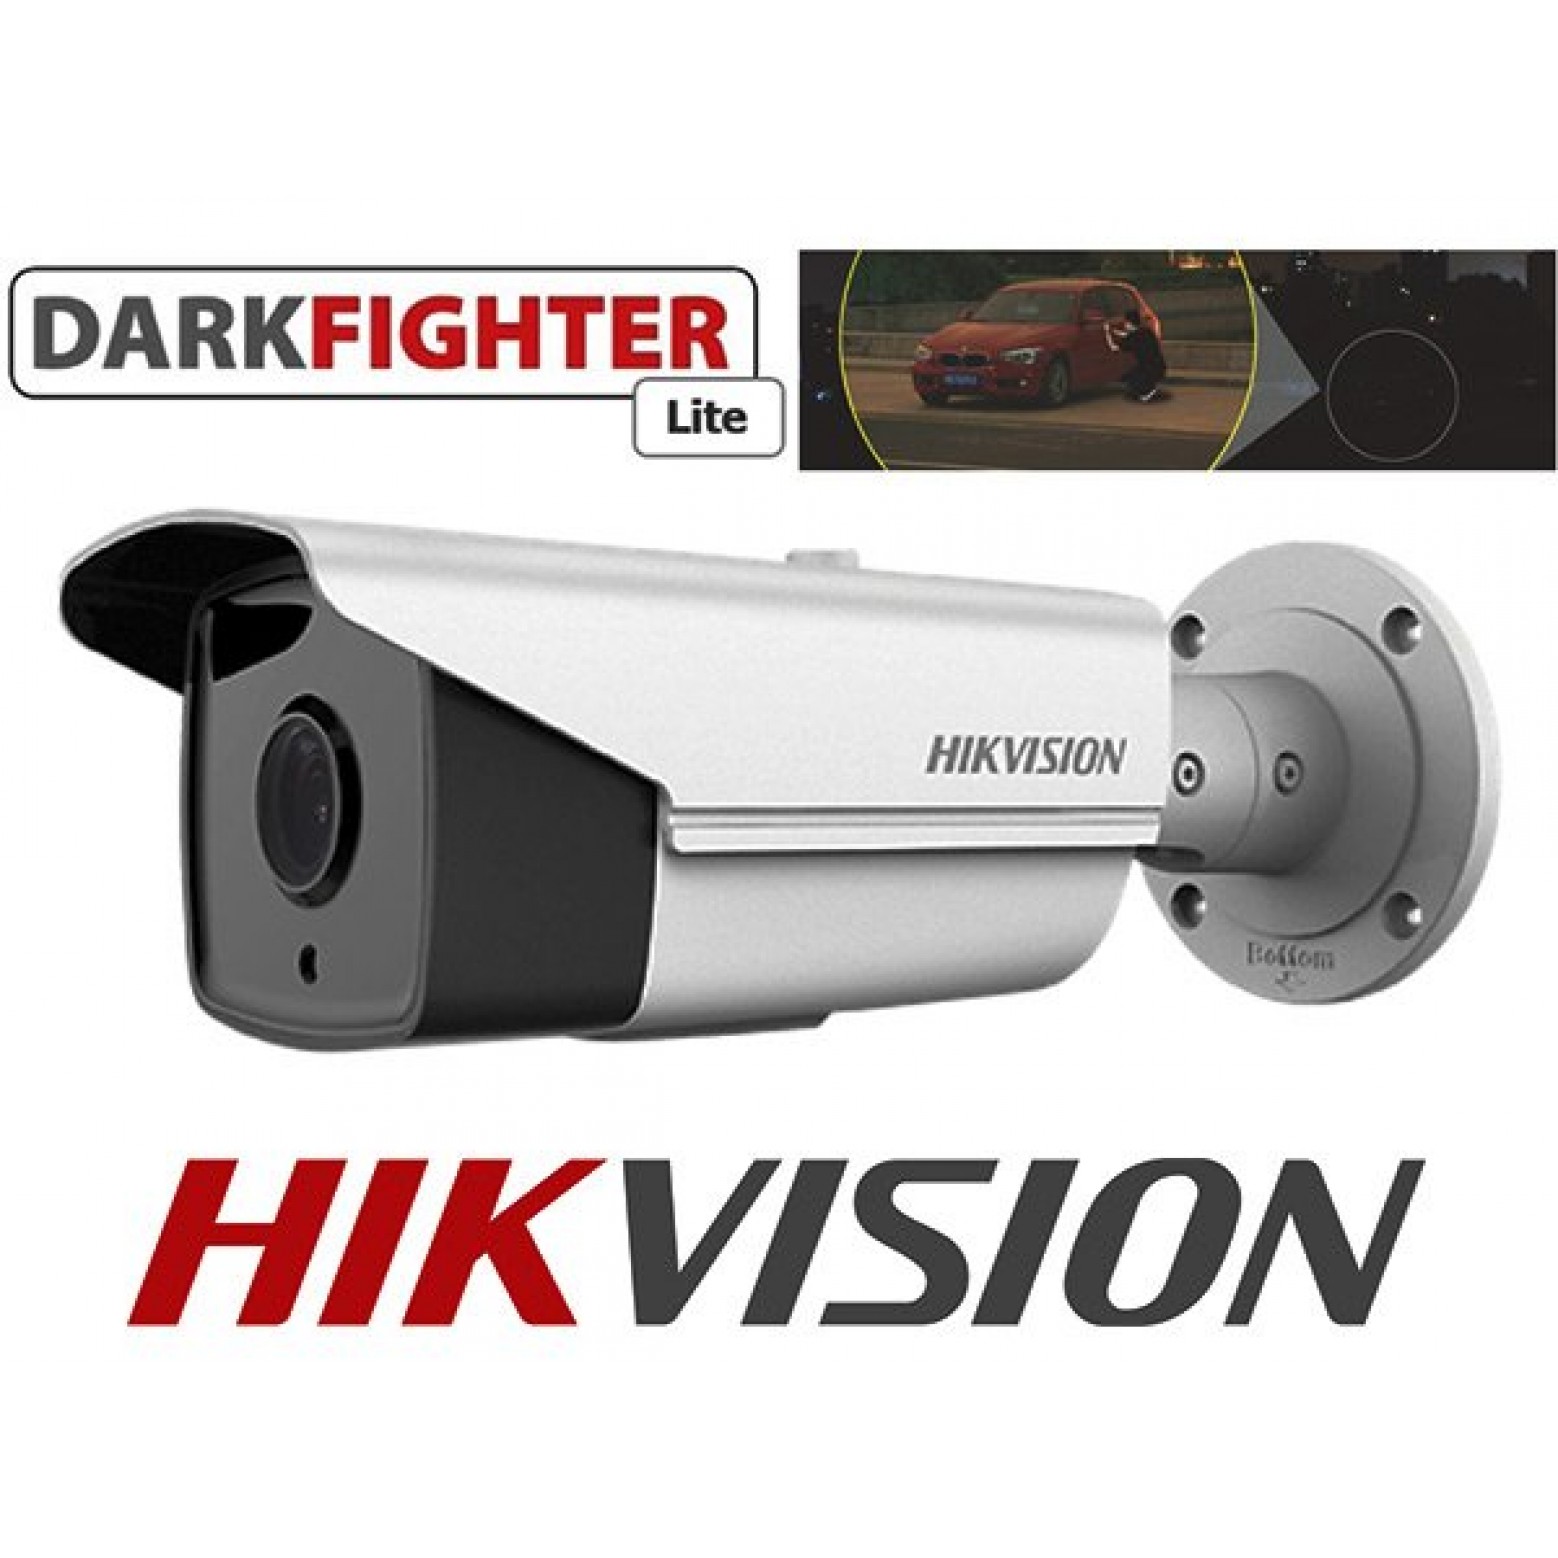 Hikvision DS-2CD4B26FWD-IZS Darkfighter Bullet